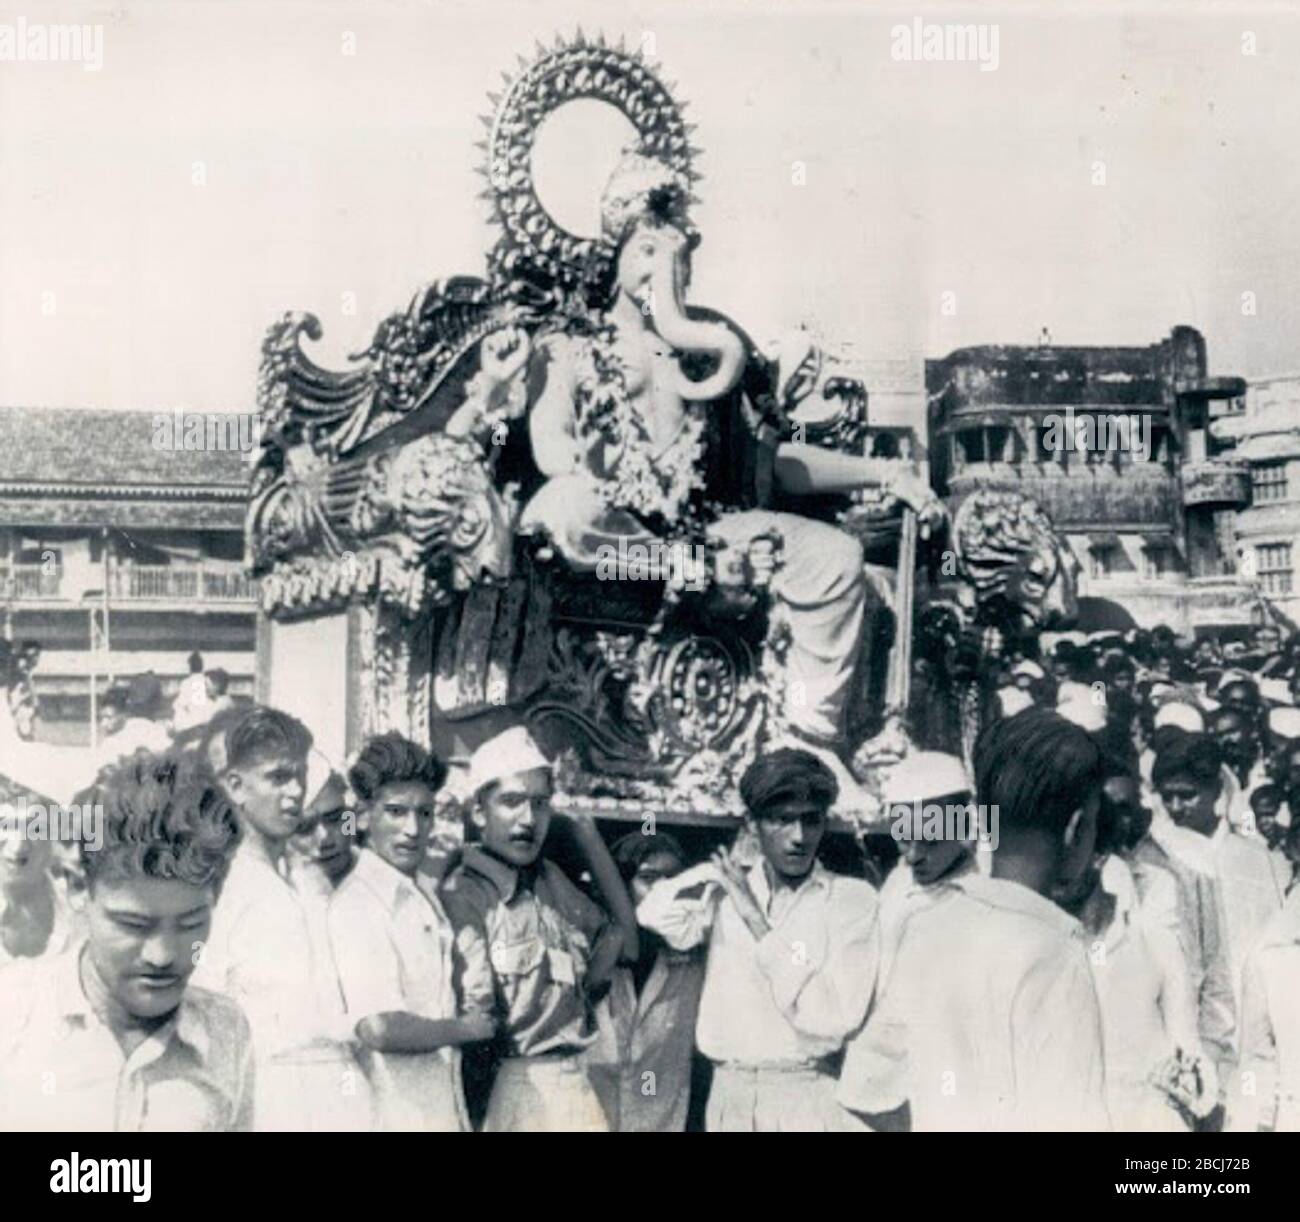 'English: Hindu Idol God Of Fortune Ganesh Parade Through Bombay in 1946; 25 April 2012; http://4.bp.blogspot.com/-83AzHHAPgxA/TrwjklbY-bI/AAAAAAAAMbE/Lngenh6kHgU/s1600/1946+Hindu+Idol+God+Of+Fortune+Ganesh+Parade+Through+Bombay+India+Wire+Photo.jpg; http://www.oldindianphotos.in/; ' Stock Photo